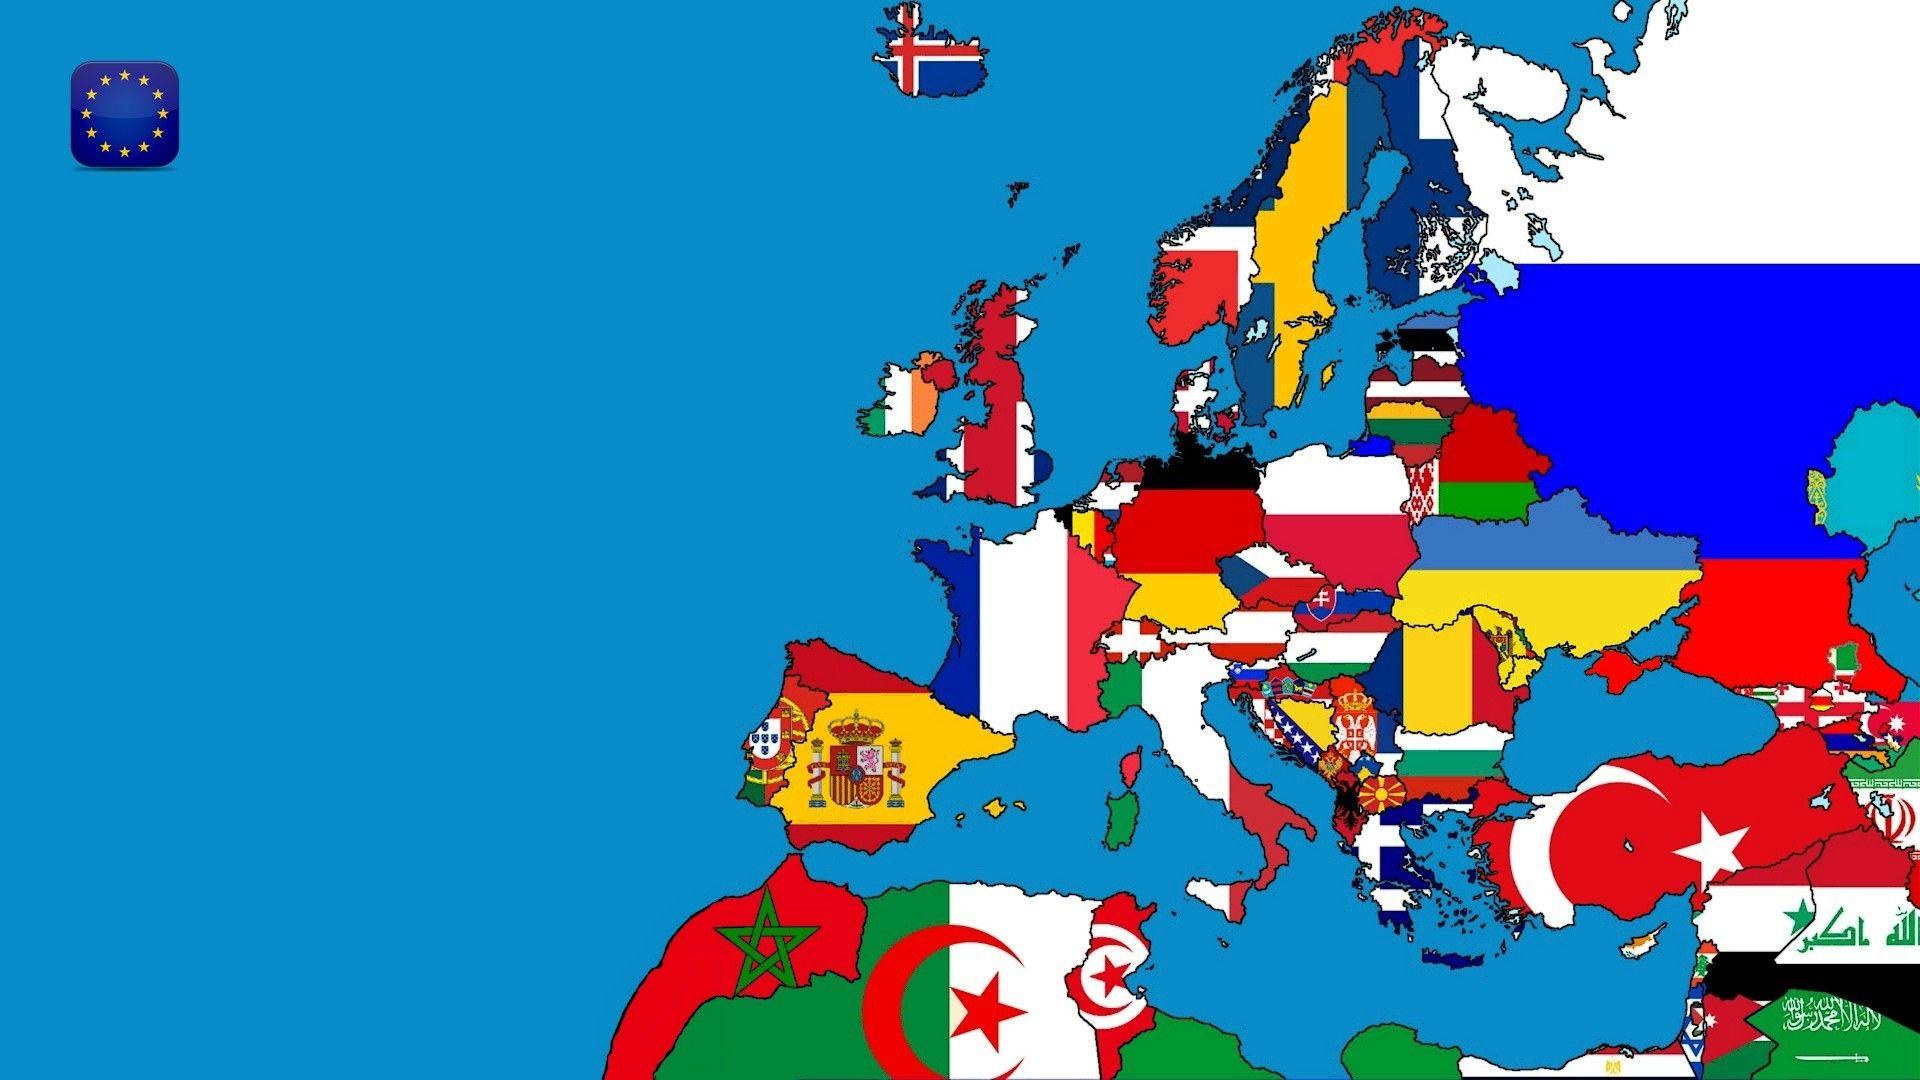 Wallpaper, illustration, sea, cartoon, flag, world, map, Europe